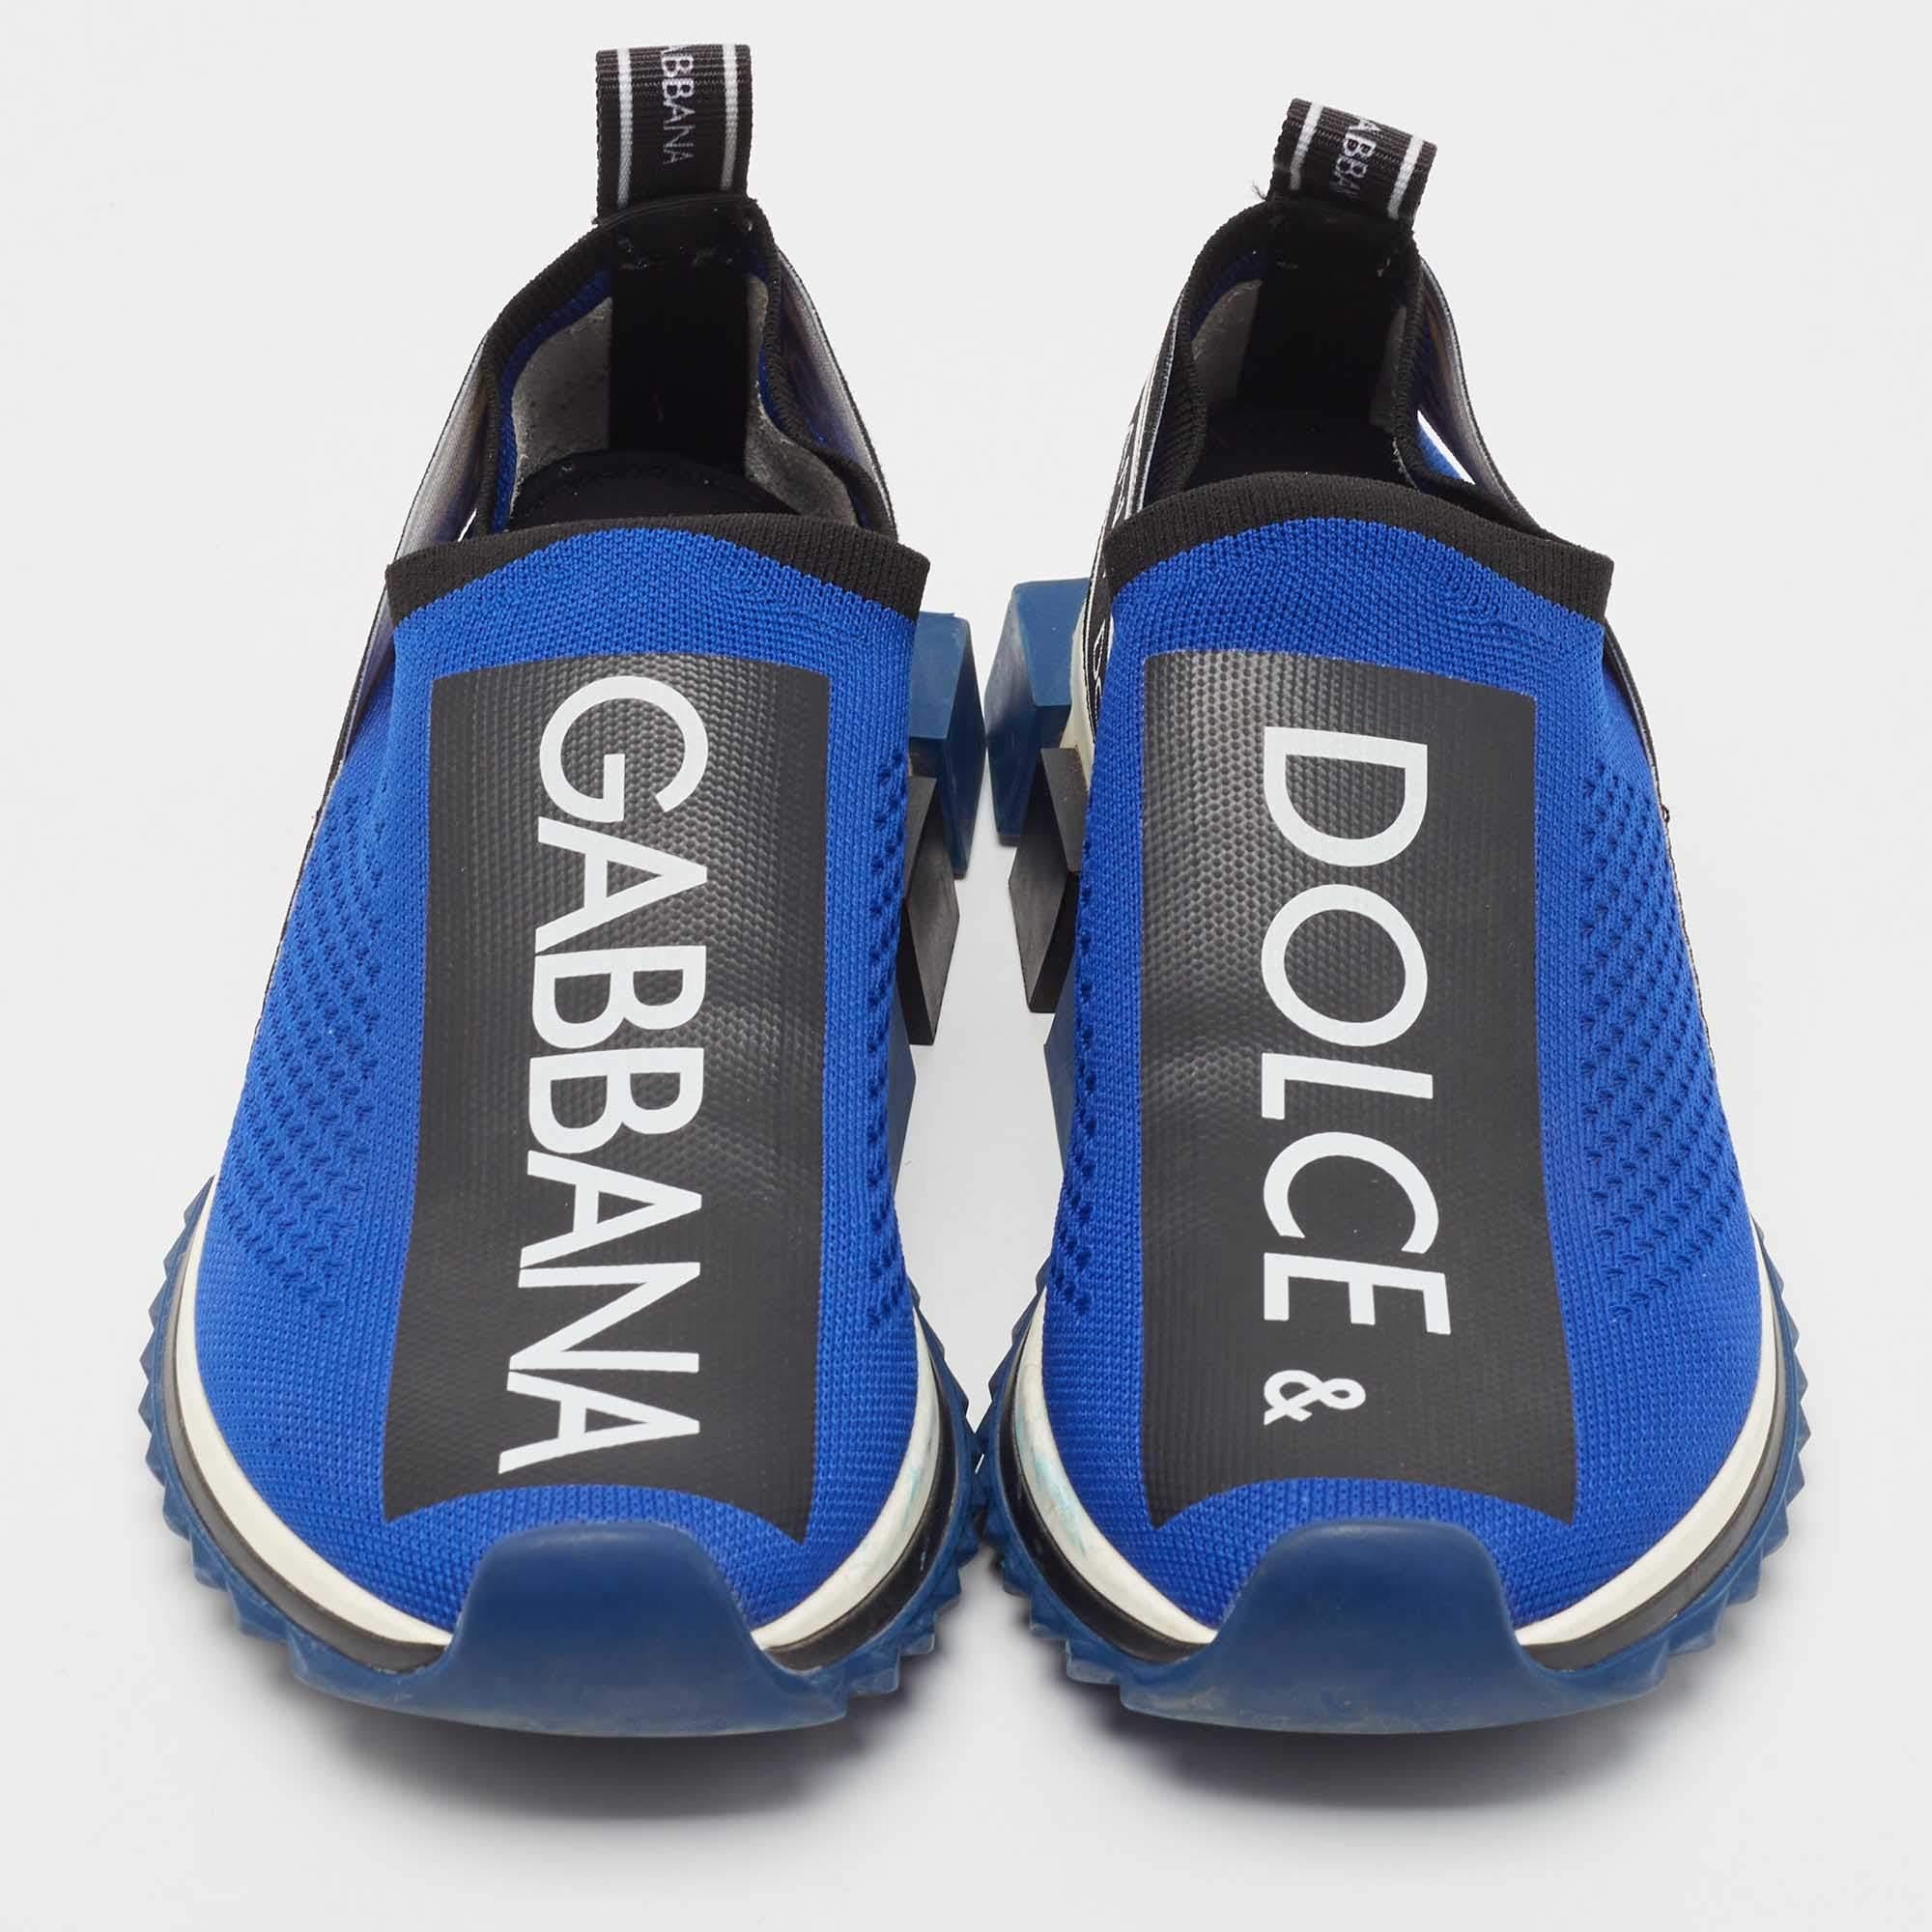 Dolce & Gabbana Blue/Black Knit Fabric Sorrento Sneakers Size 39 8